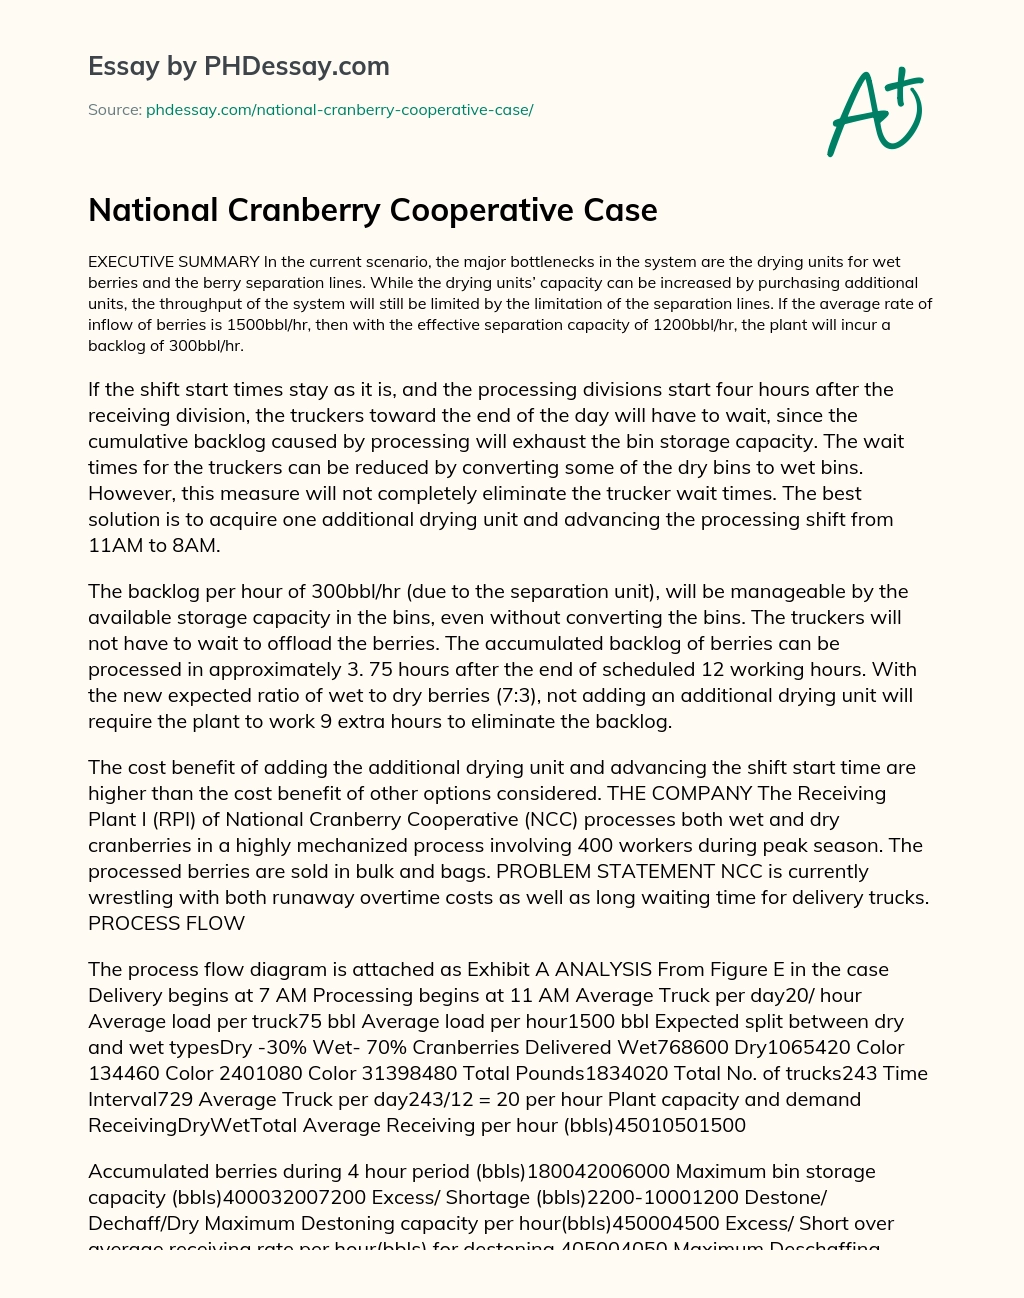 National Cranberry Cooperative Case essay